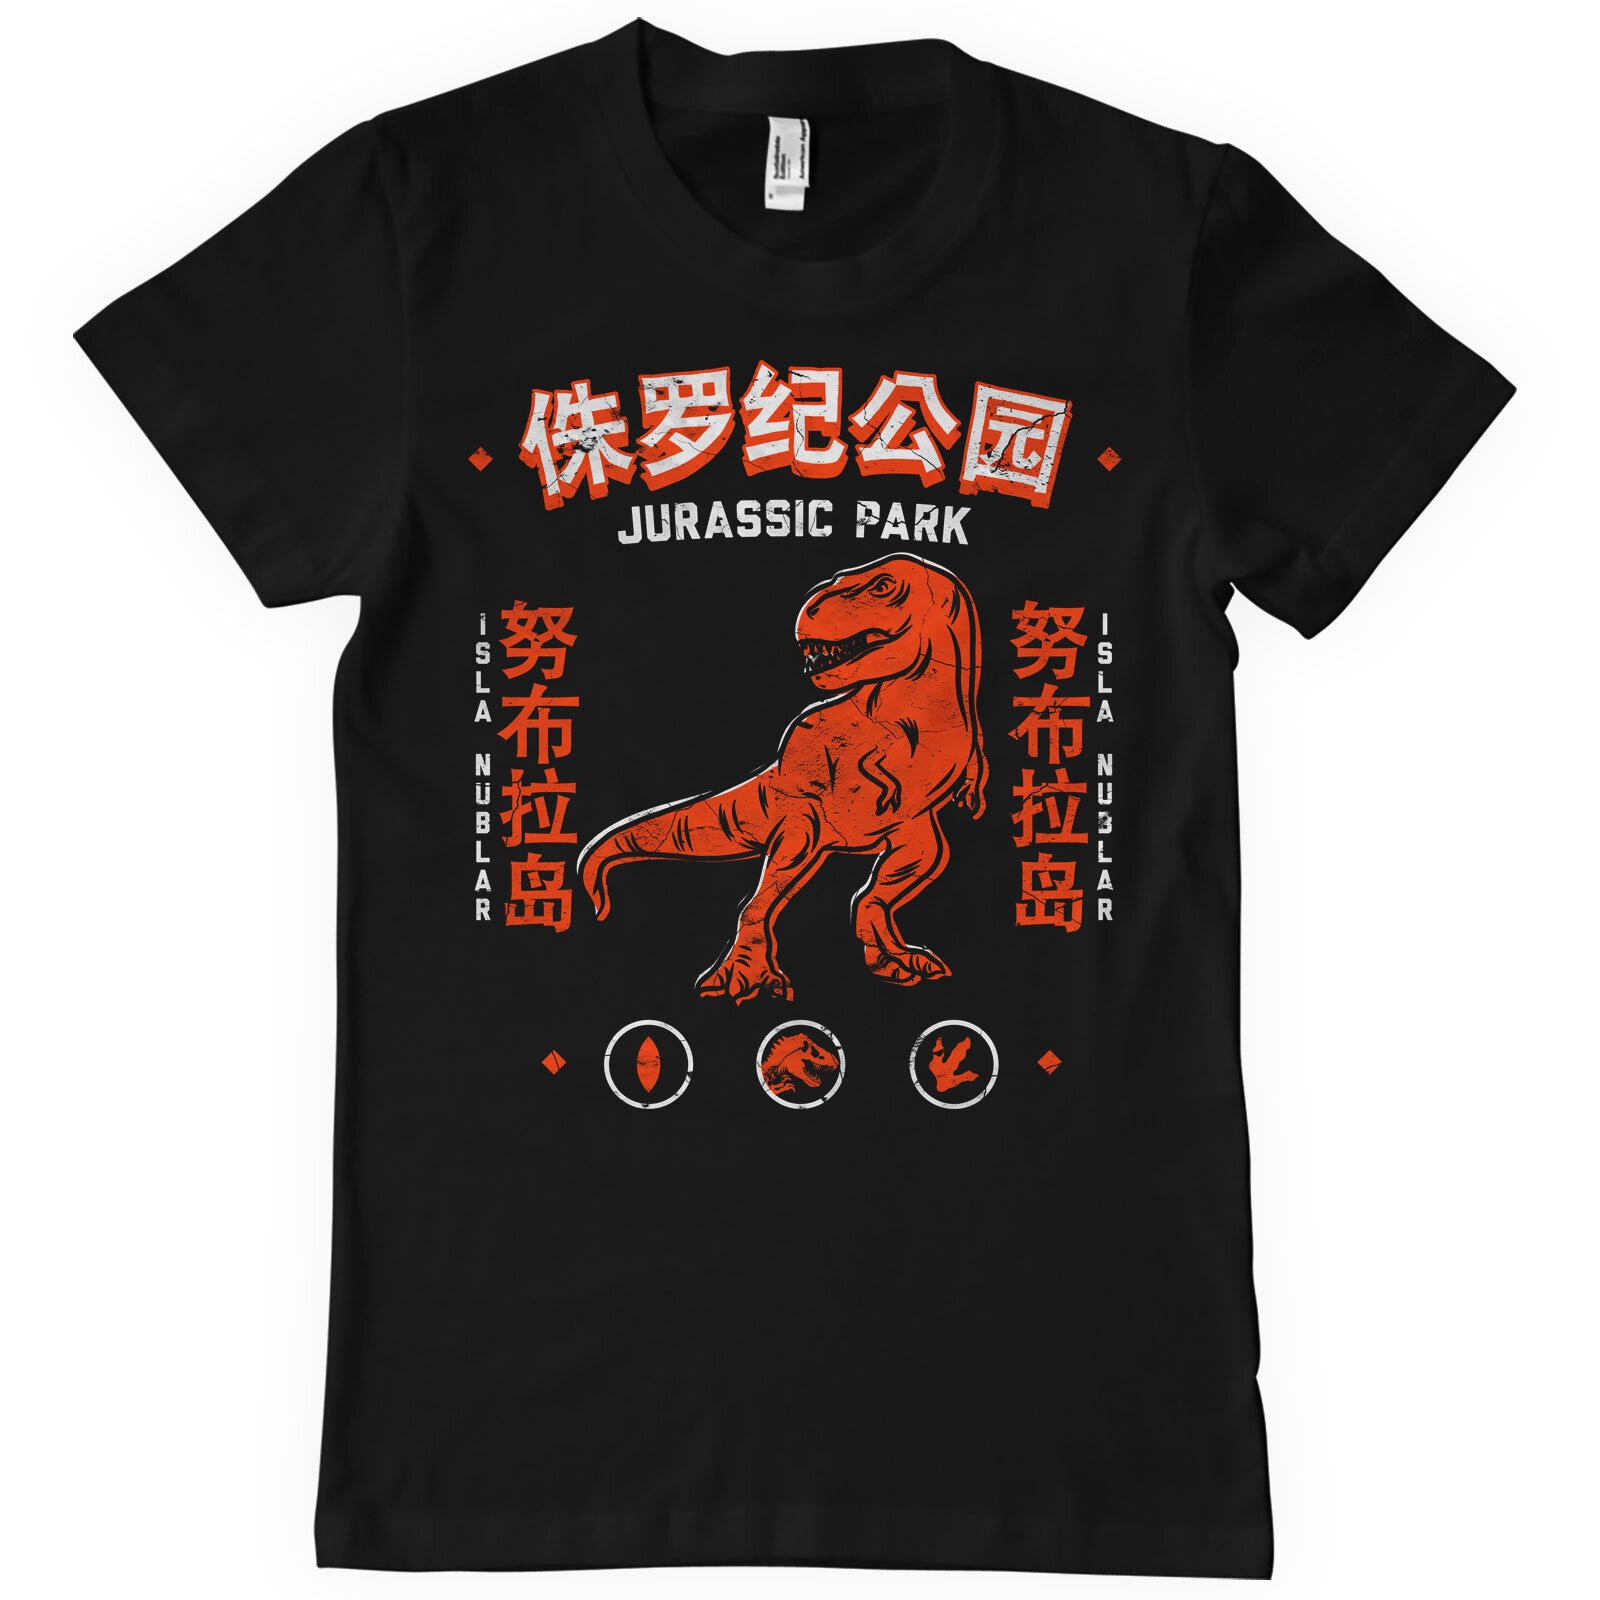 Jurassic Park - Isla Nublar T-Shirt